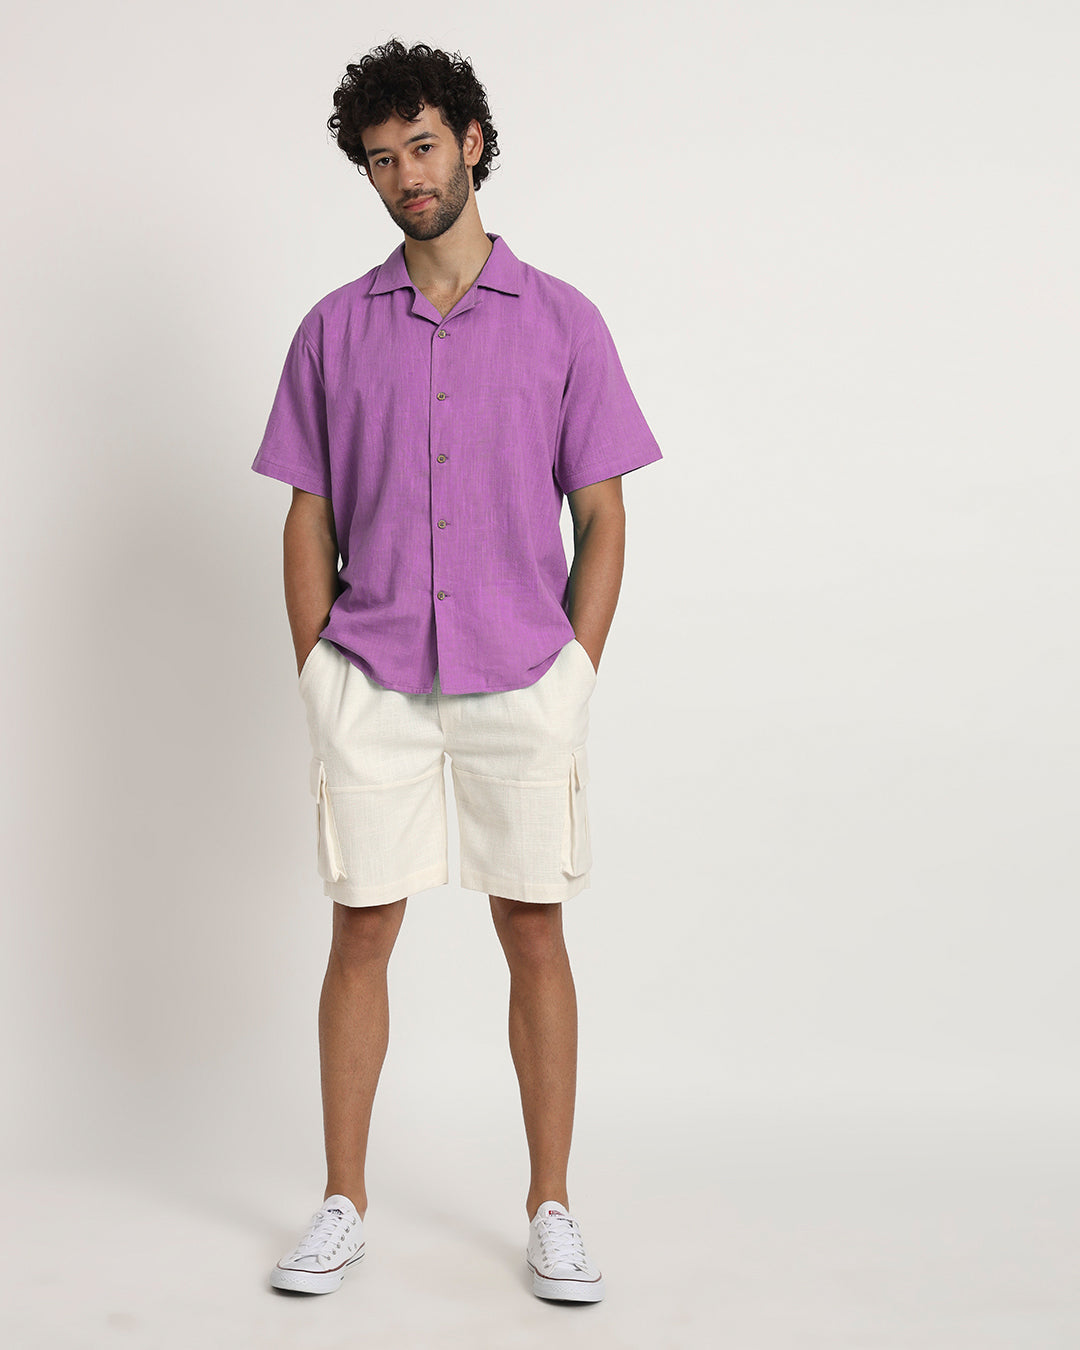 Combo: Classic Wisteria Purple Half Sleeves Men's Shirt & Cargo Shorts